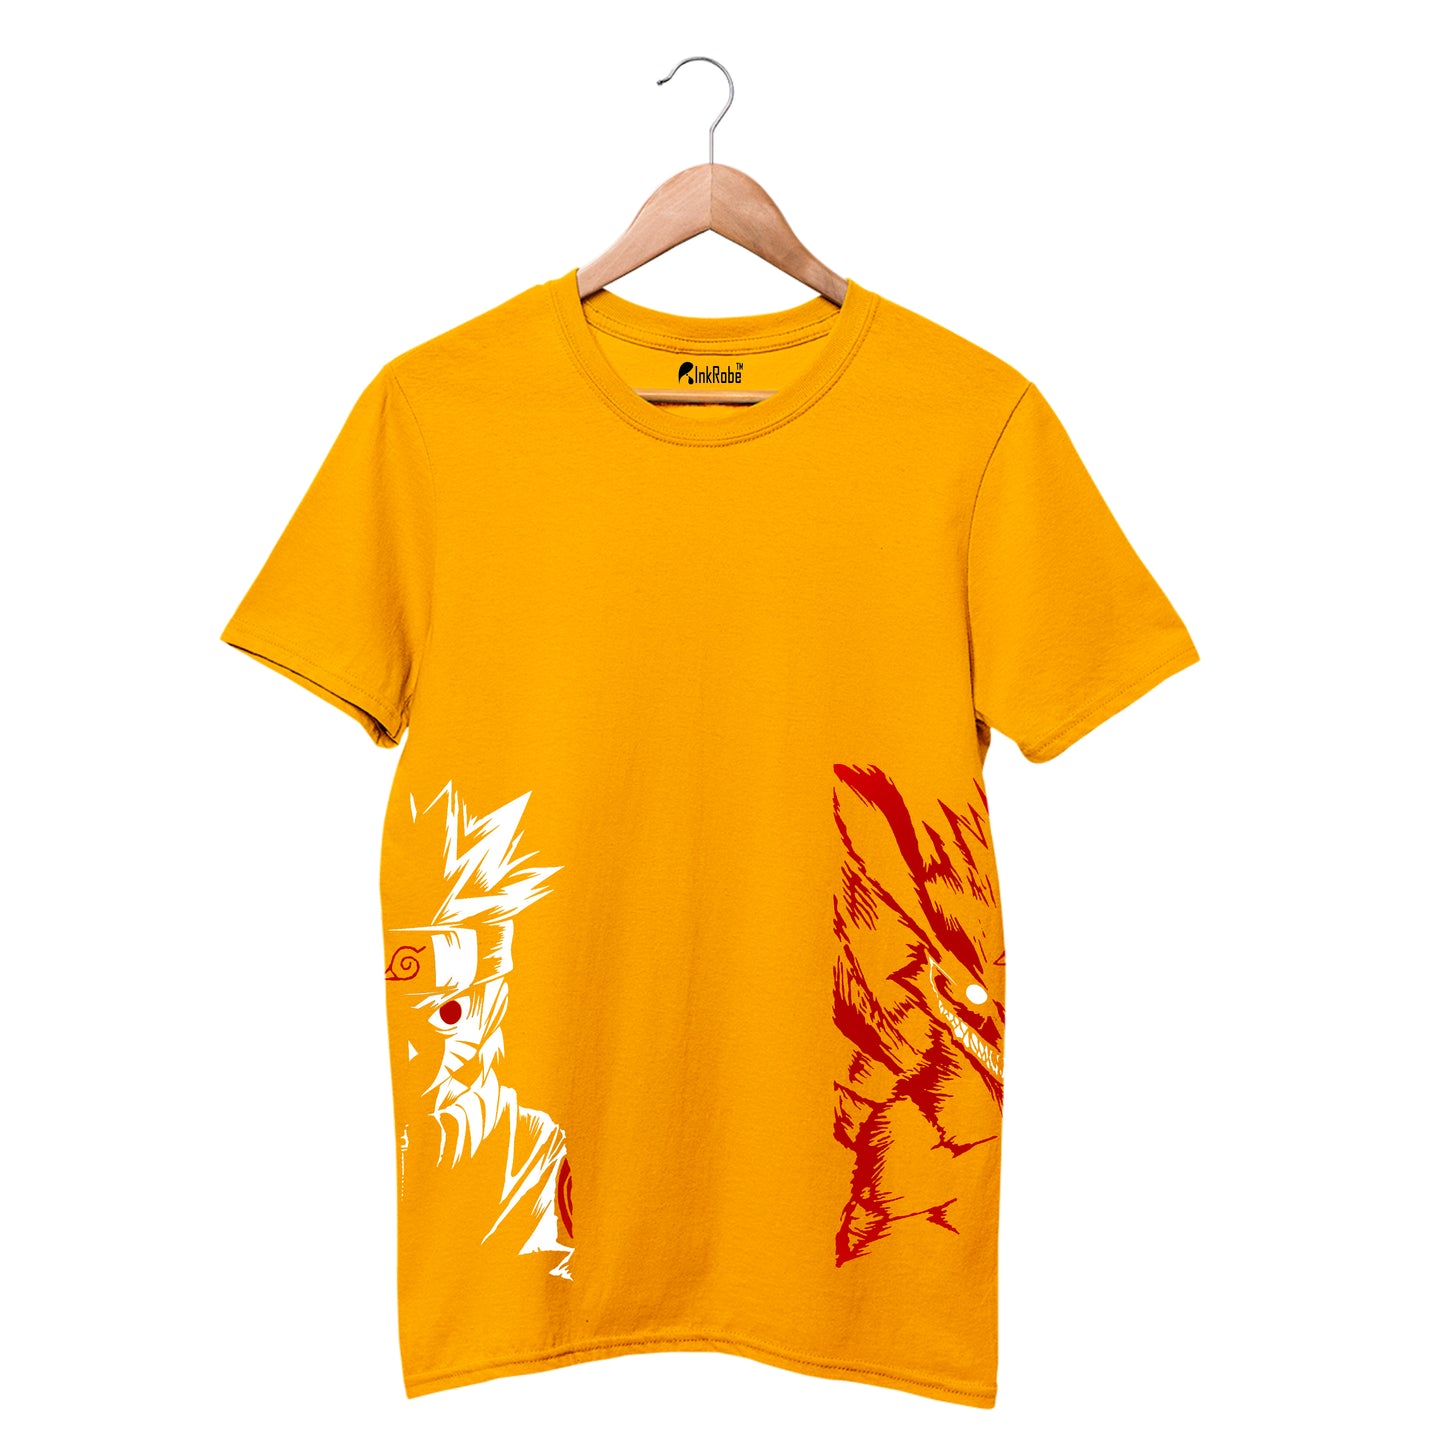 Naruto on Fire - Anime T-Shirt